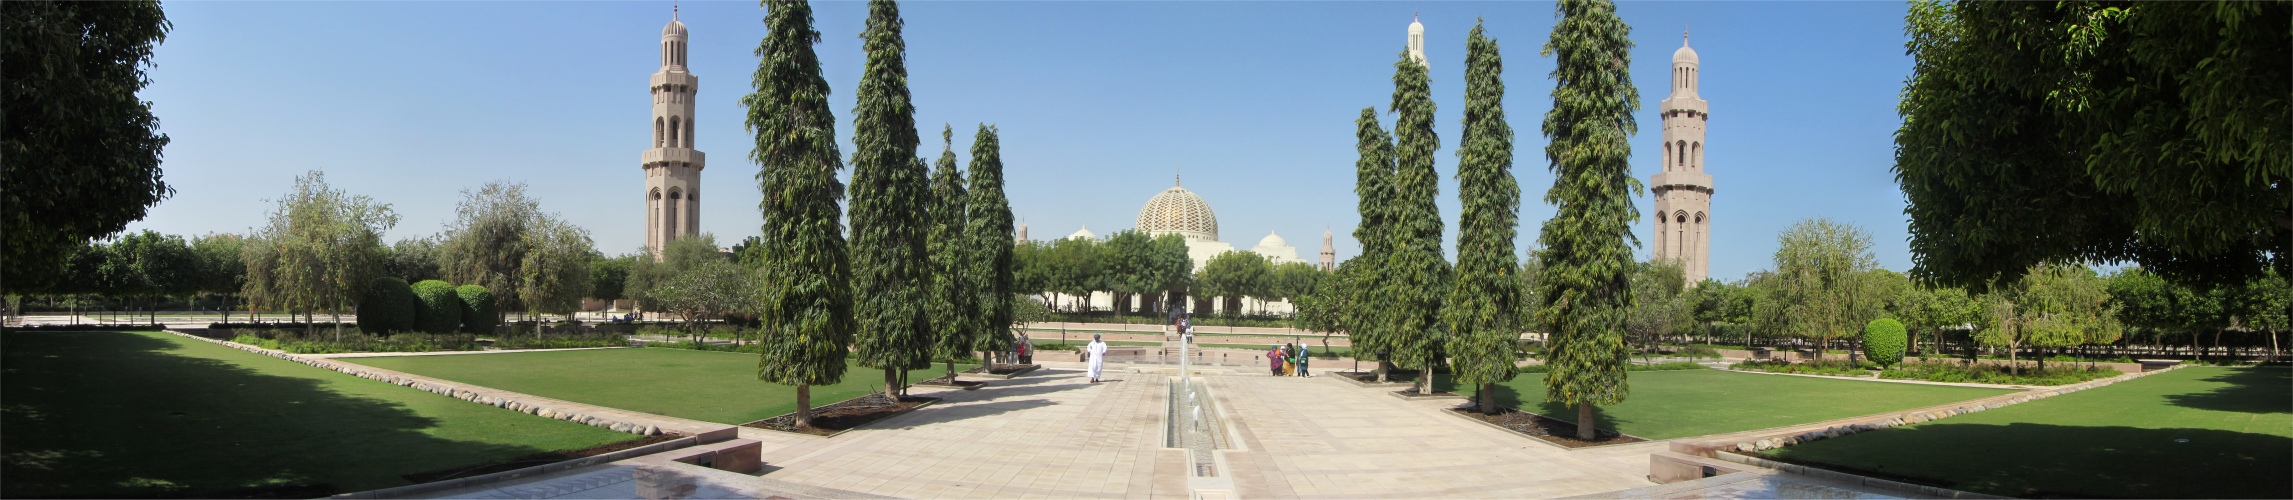 grand_mosque_entrance